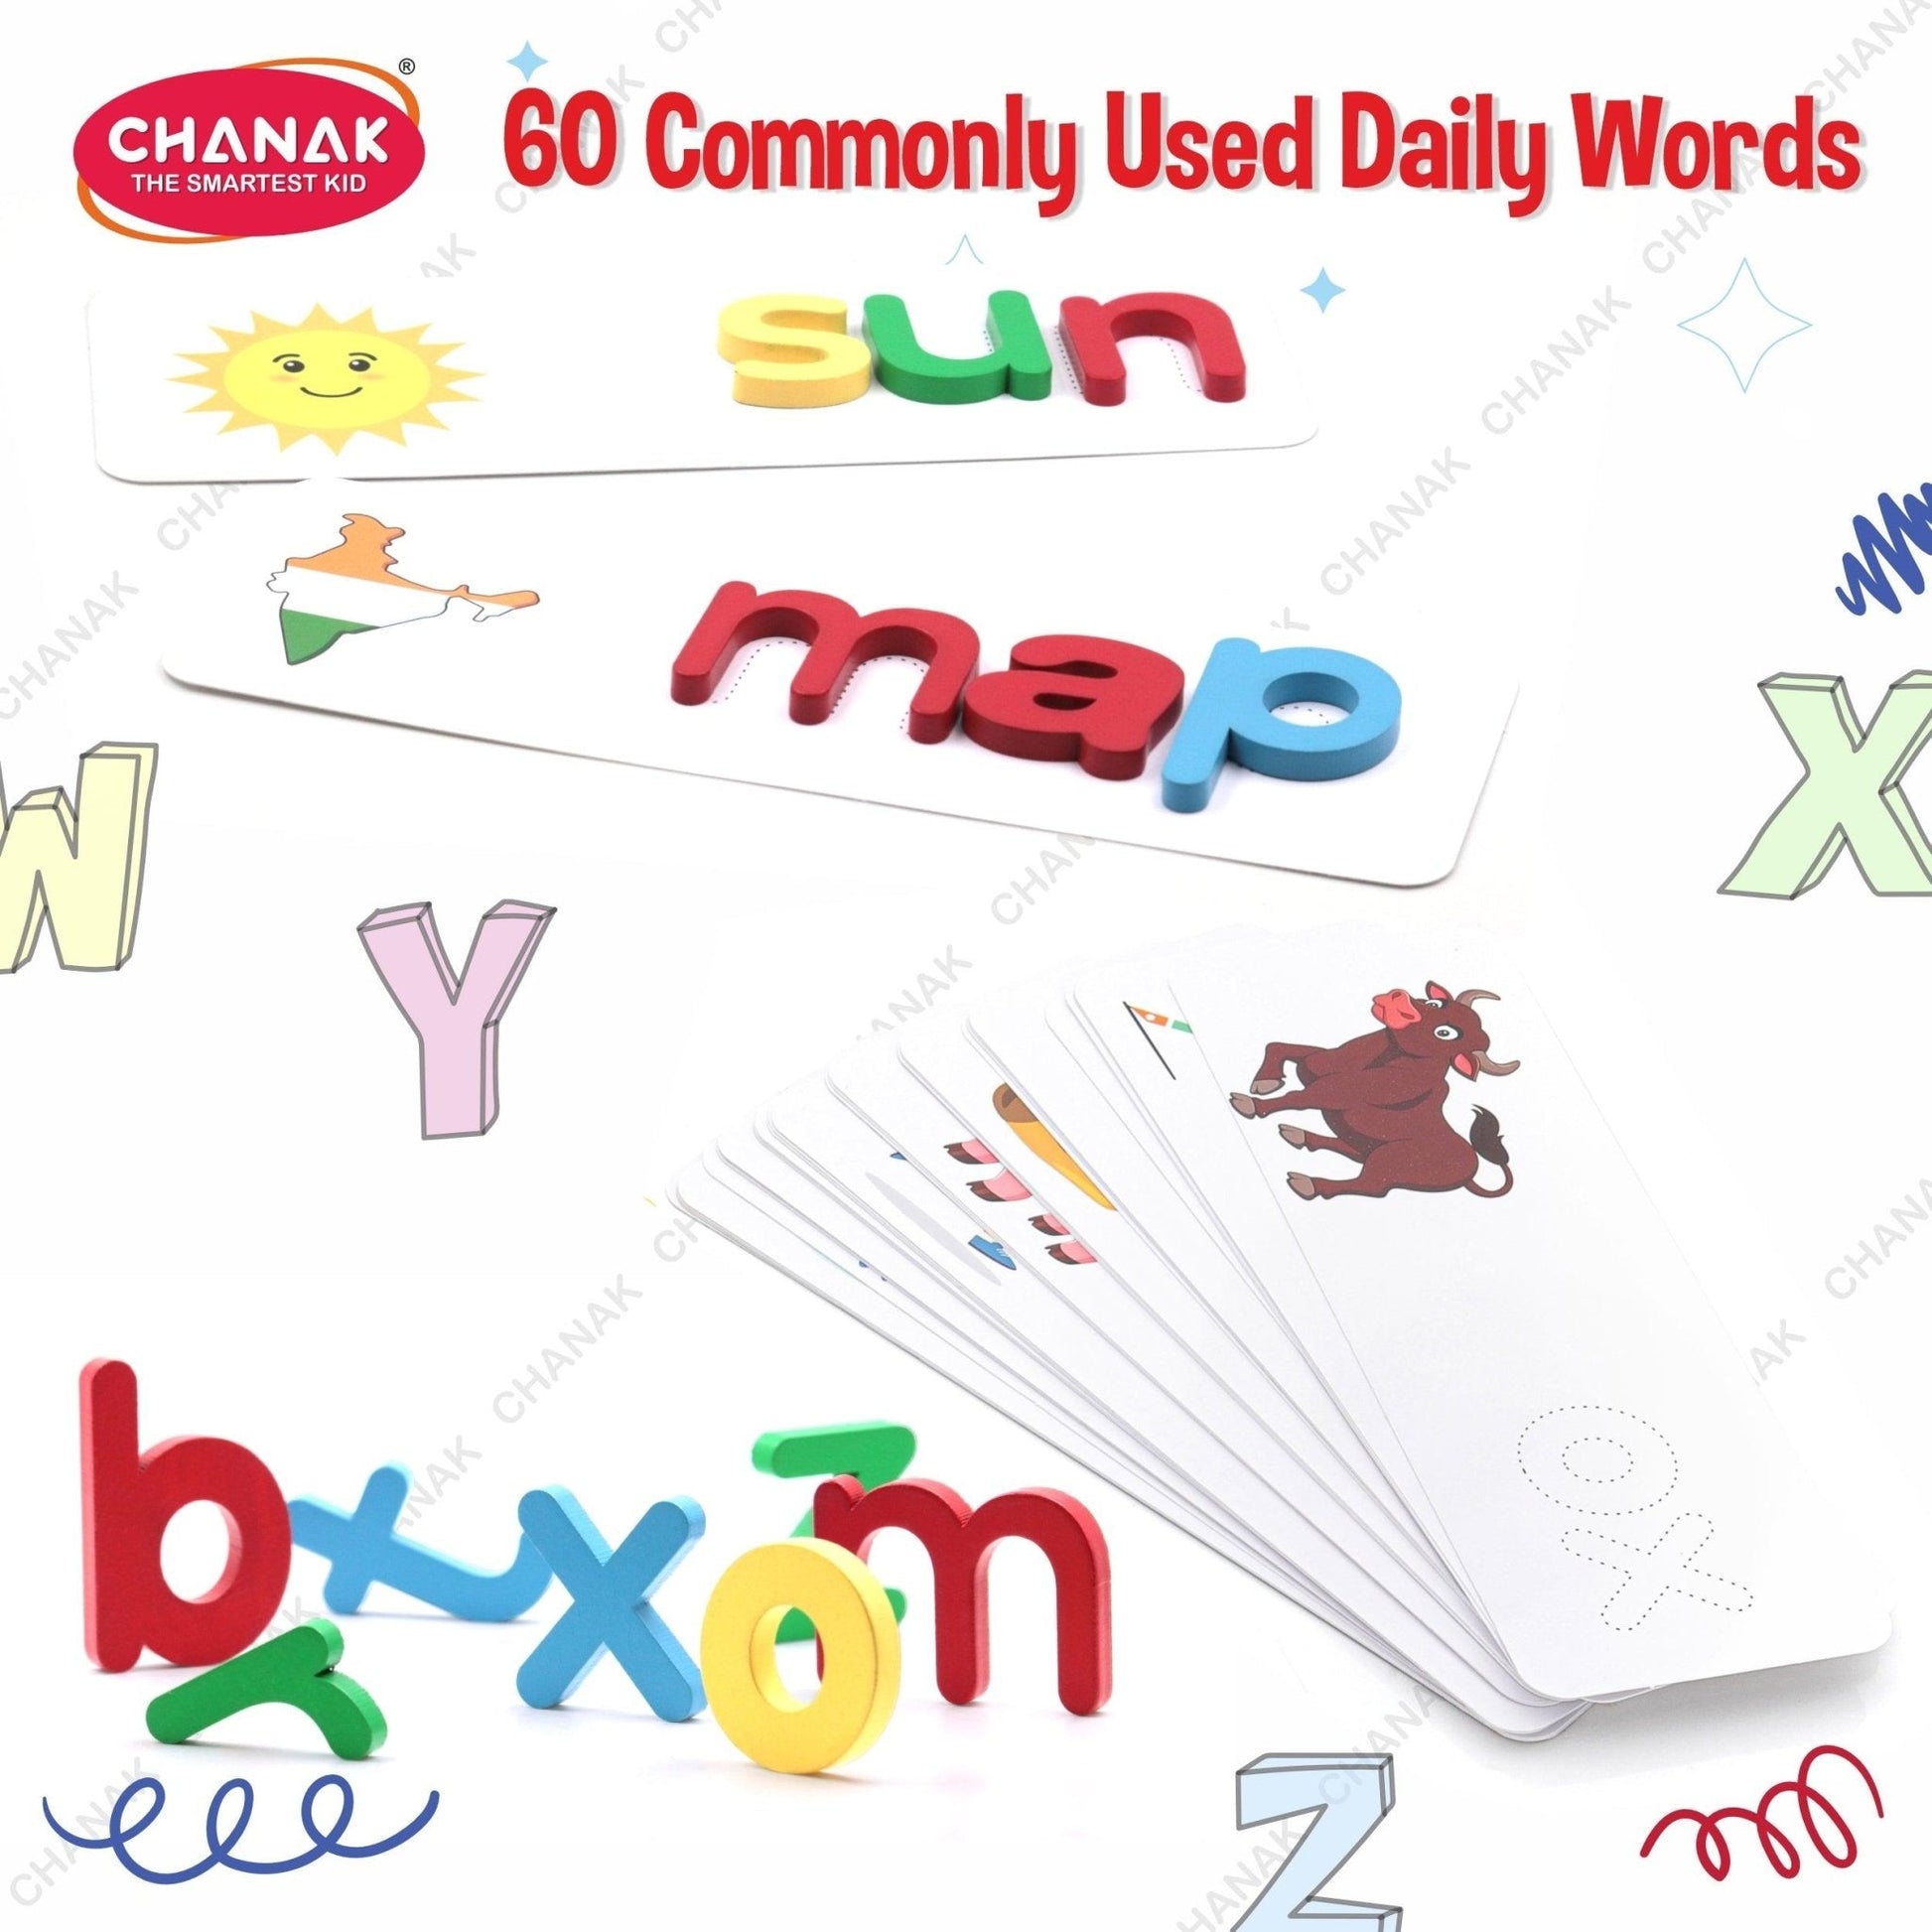 Chanak Spelling Genius Game for Kids - chanak